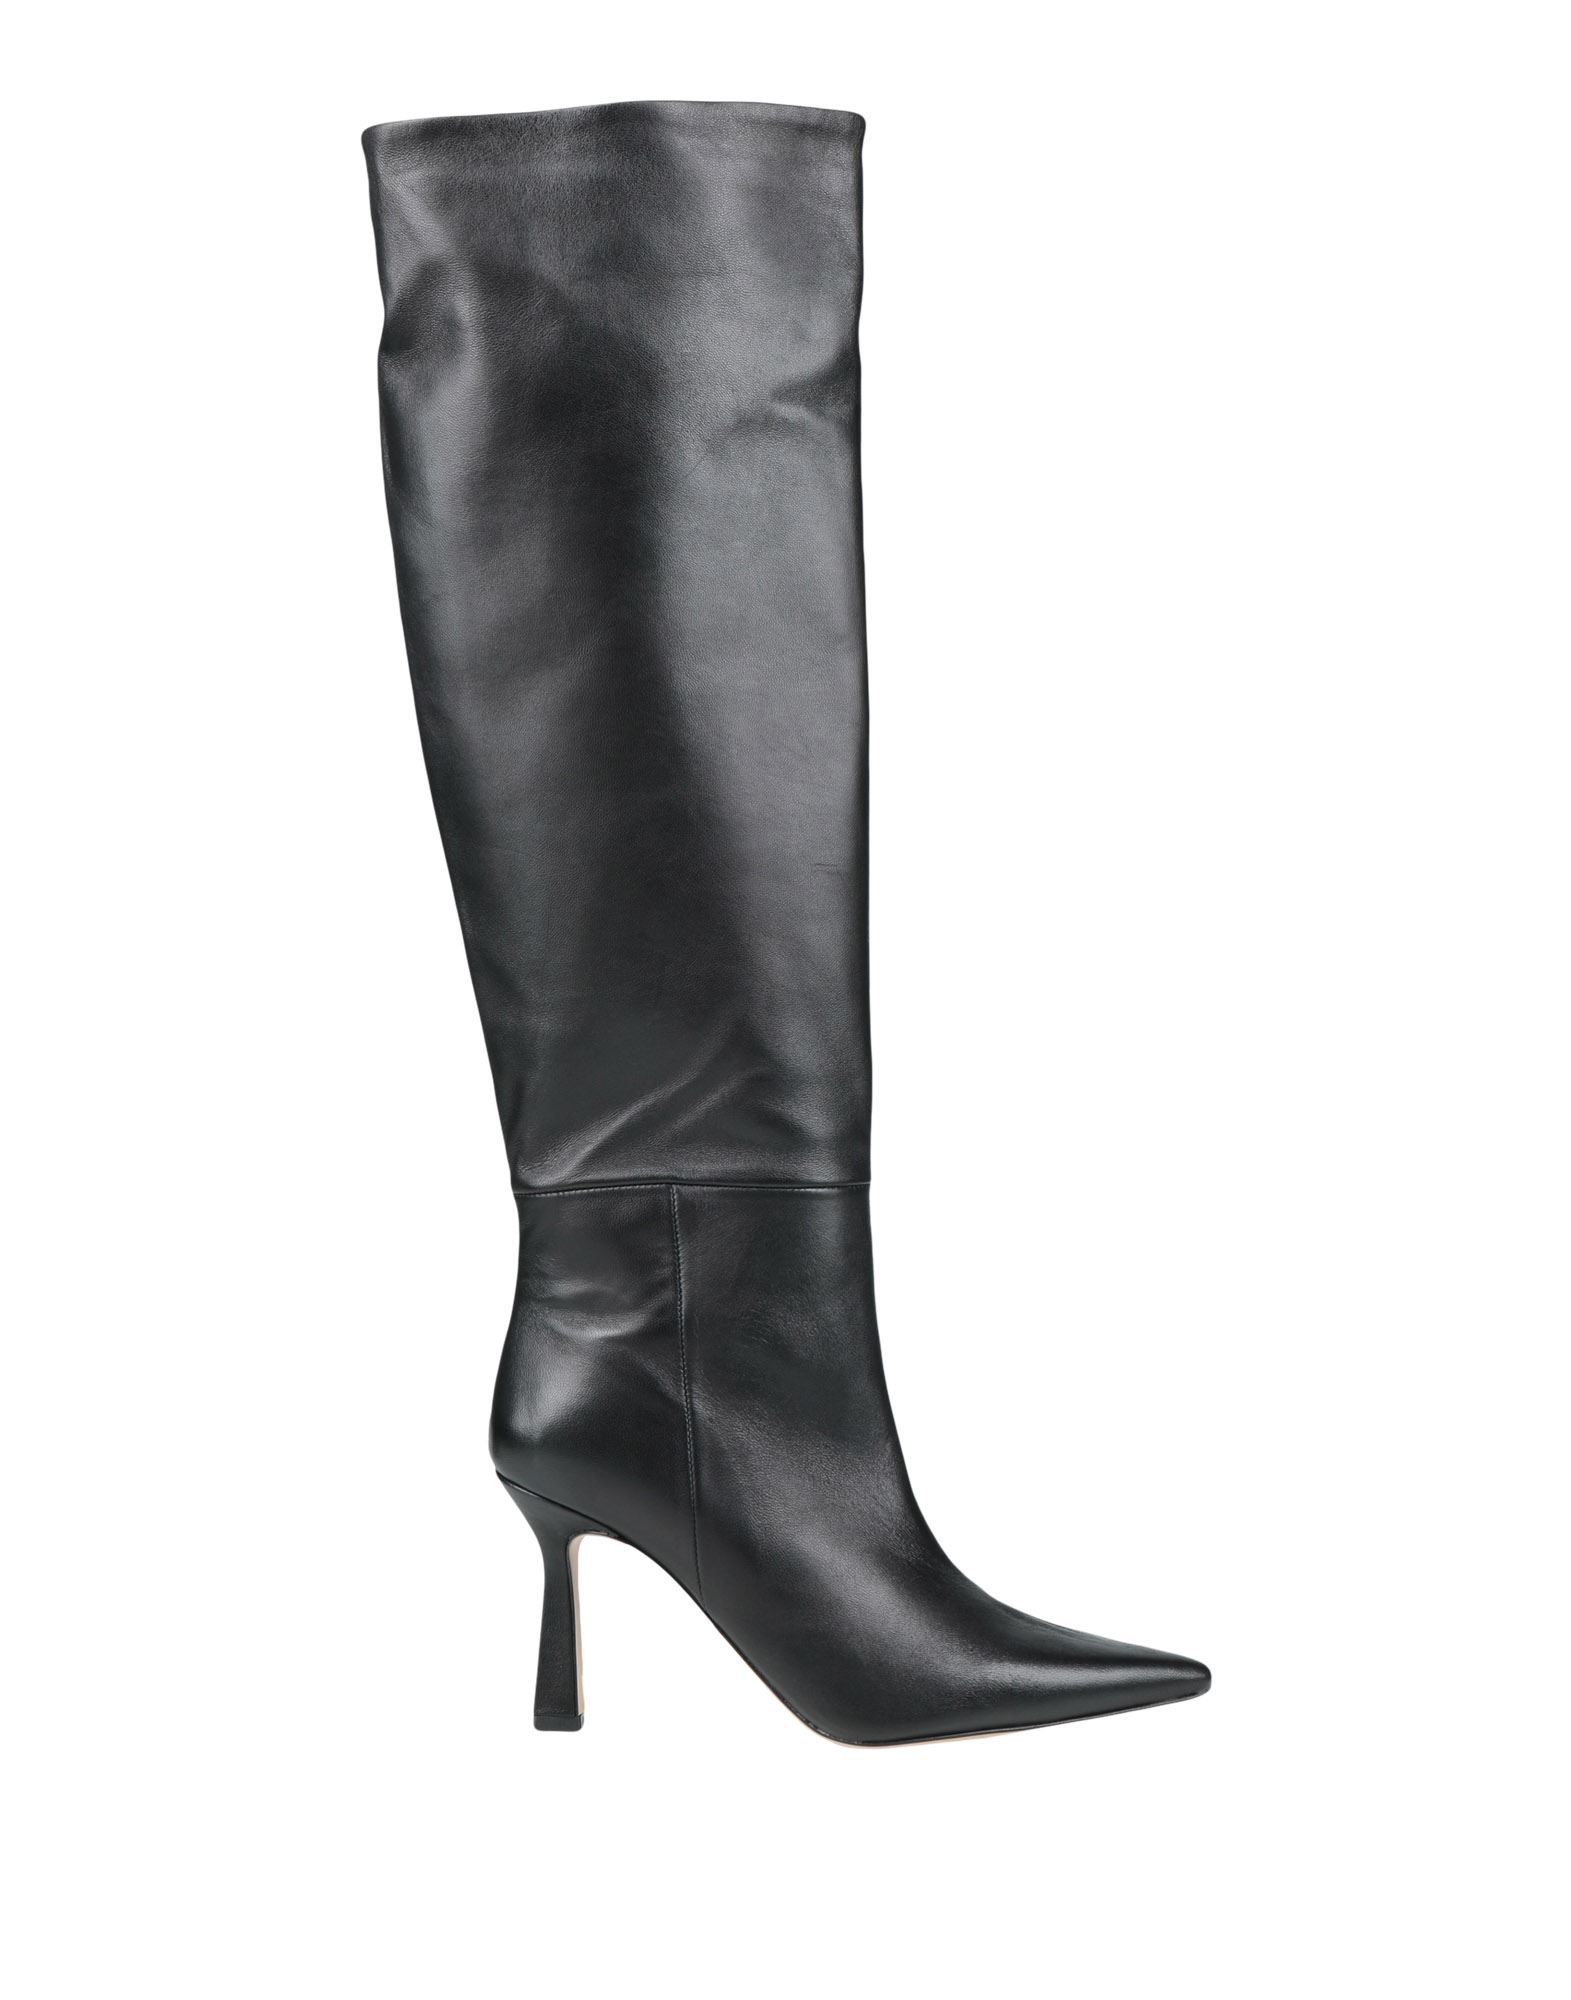 Shop Bianca Di Woman Boot Black Size 7 Soft Leather